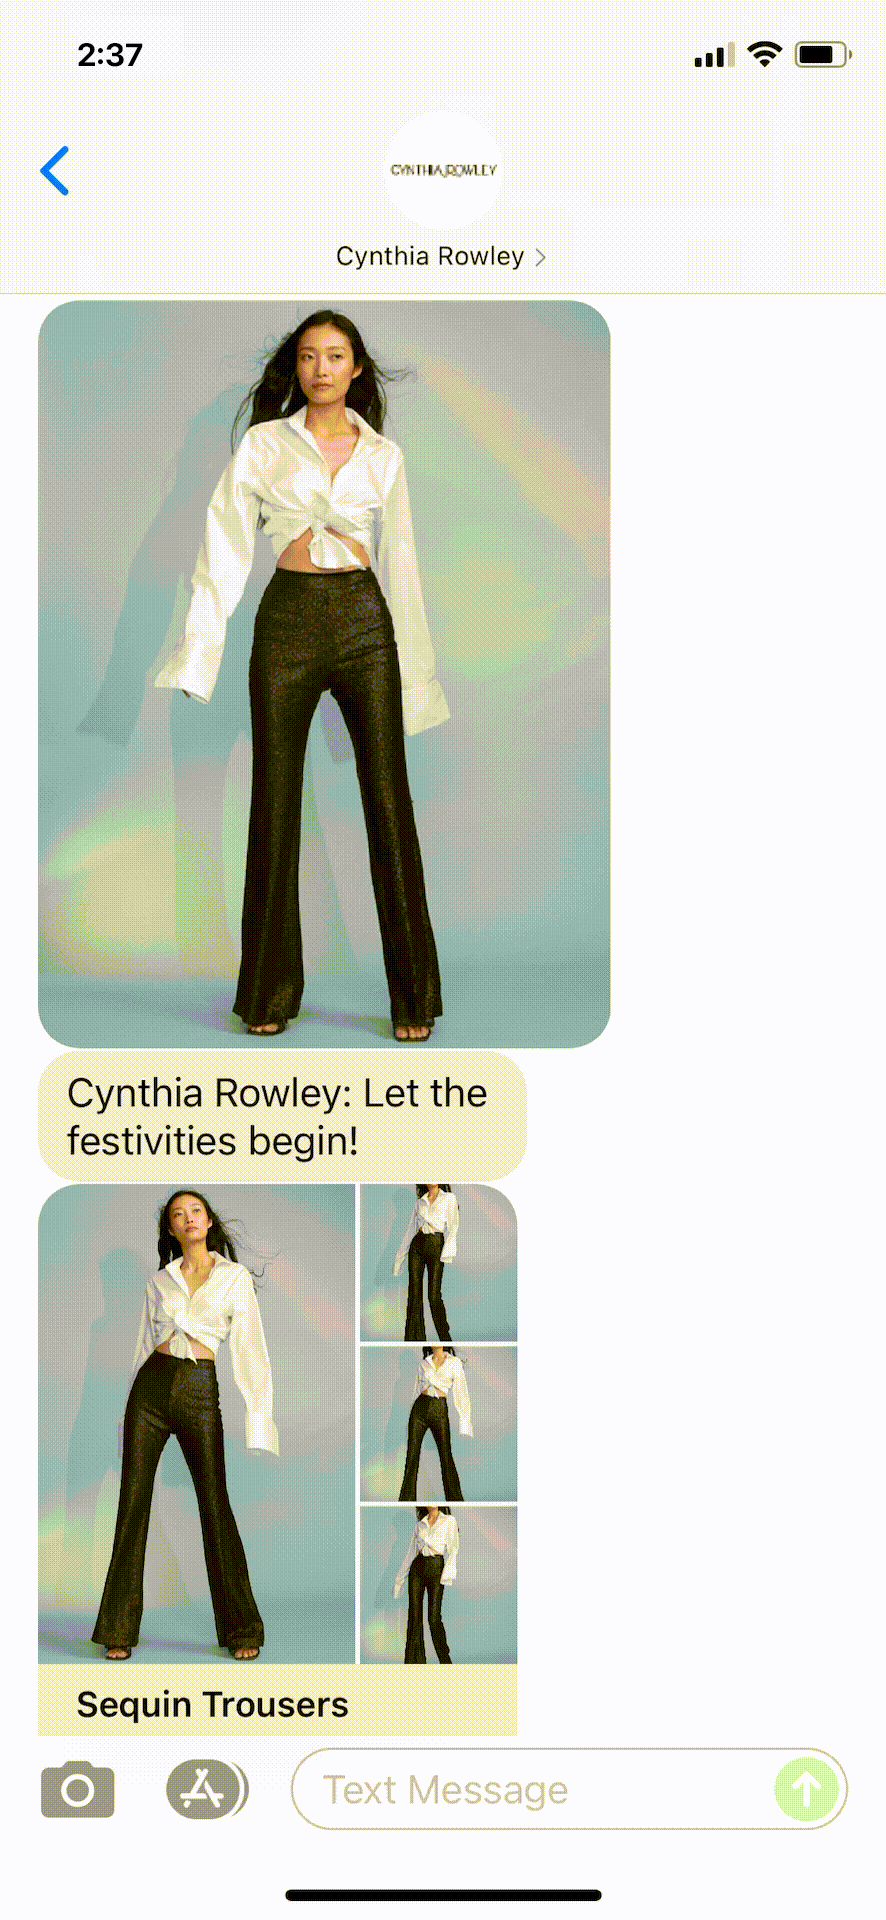 Cynthia-Rowley-Text-Message-Marketing-Example-10.29.2021